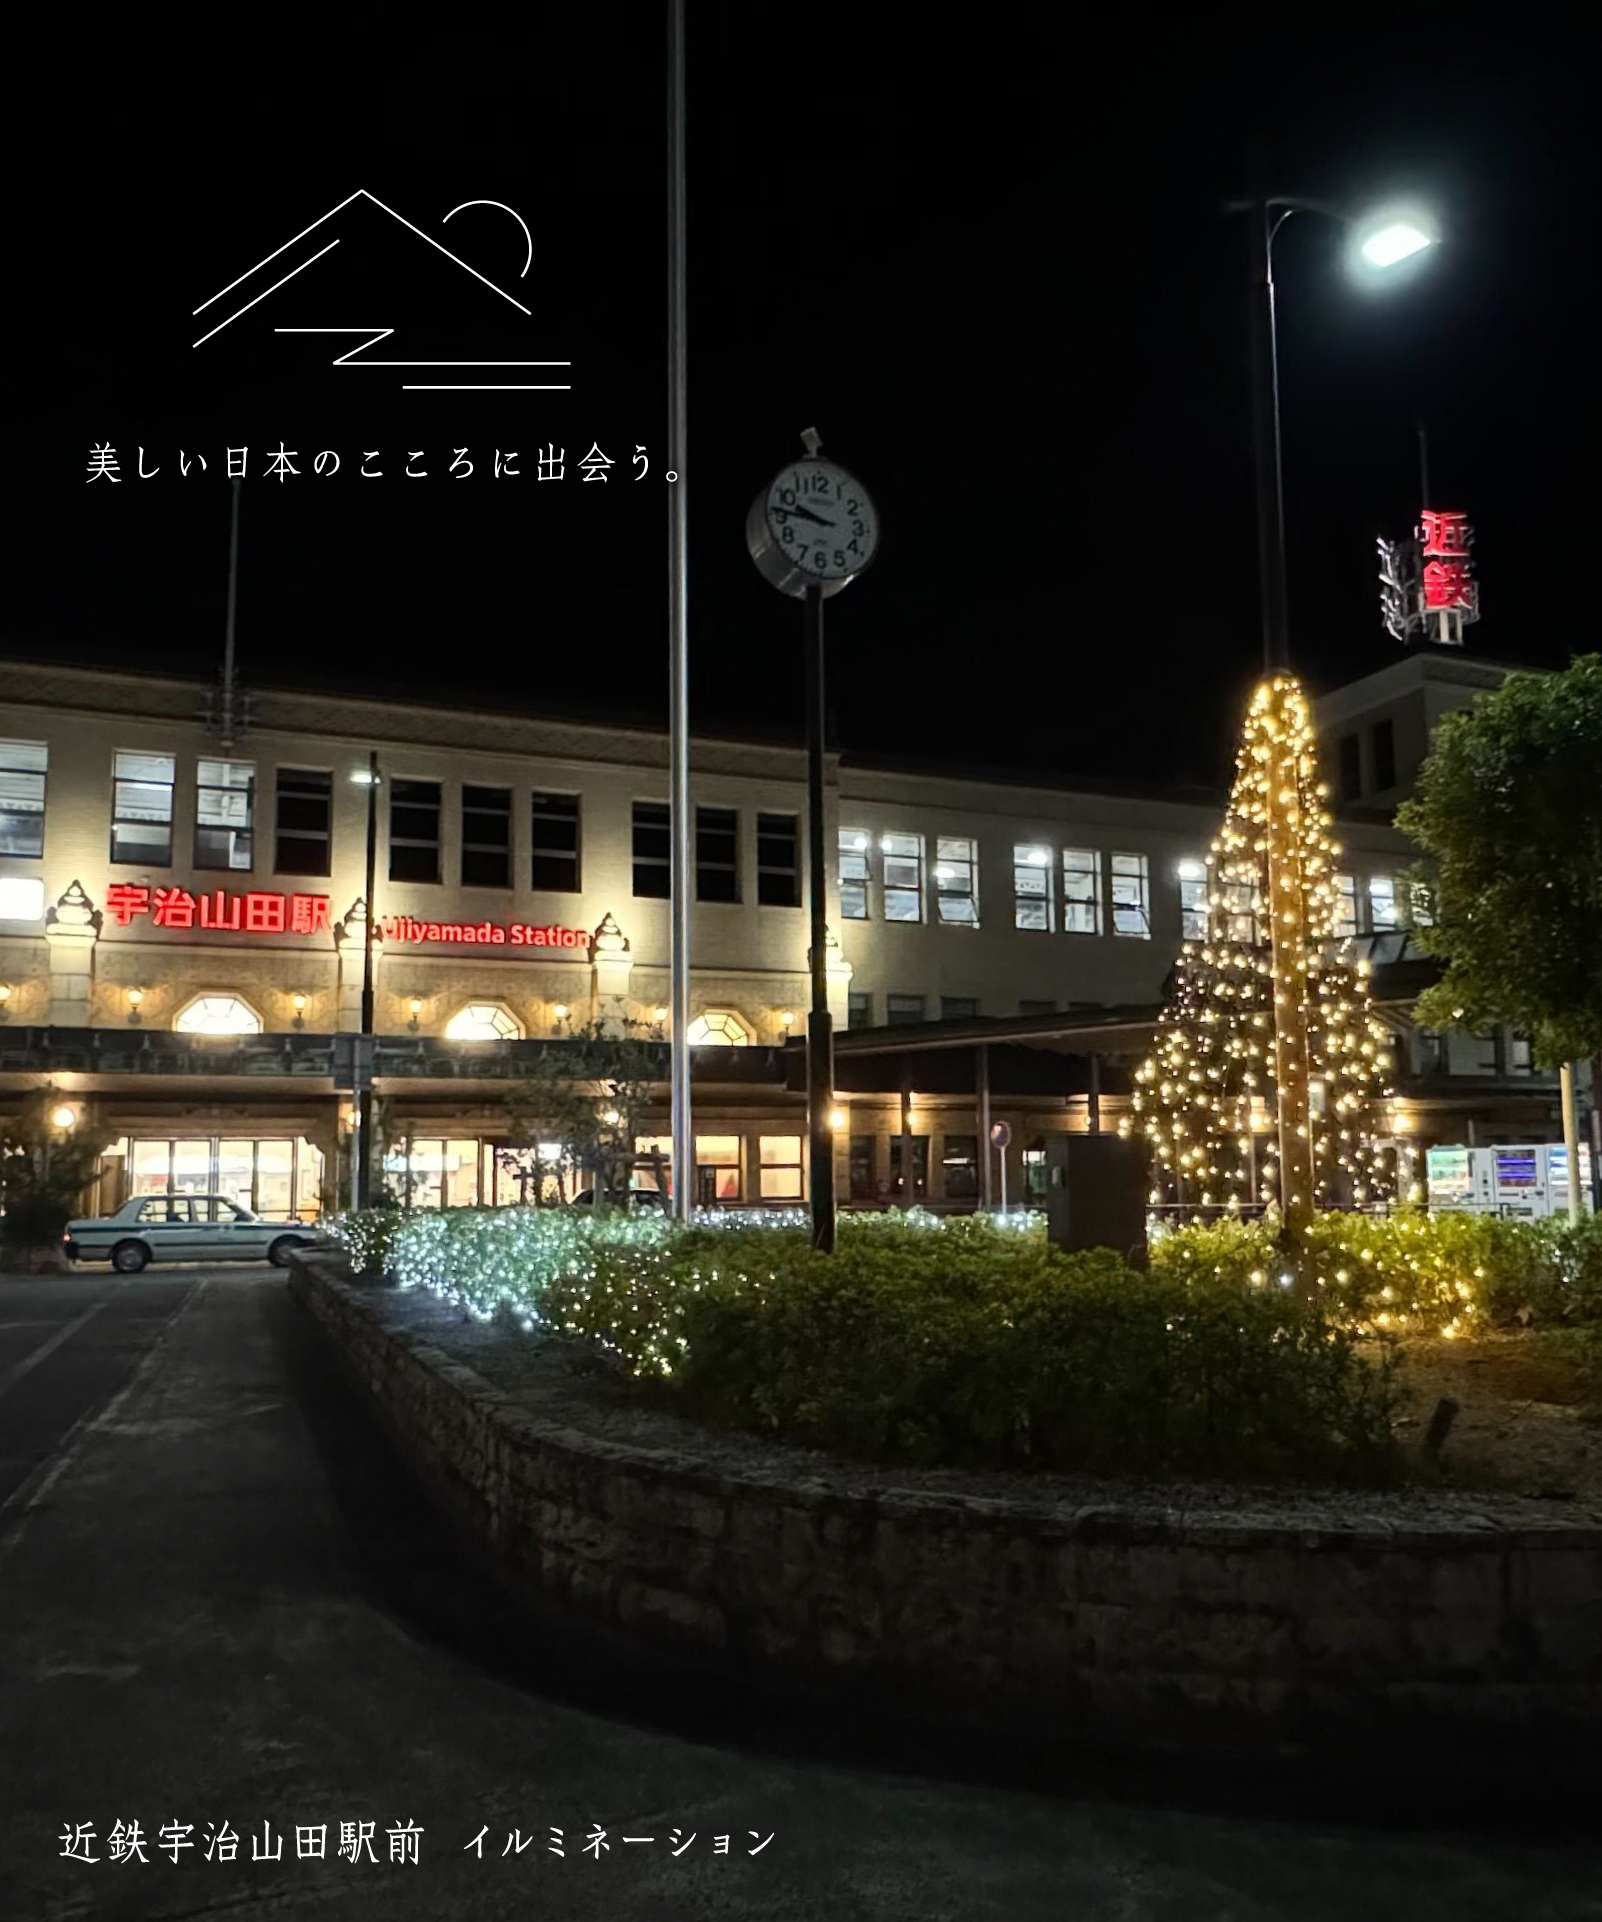 Illuminazione davanti alla stazione Kintetsu Ujiyamada